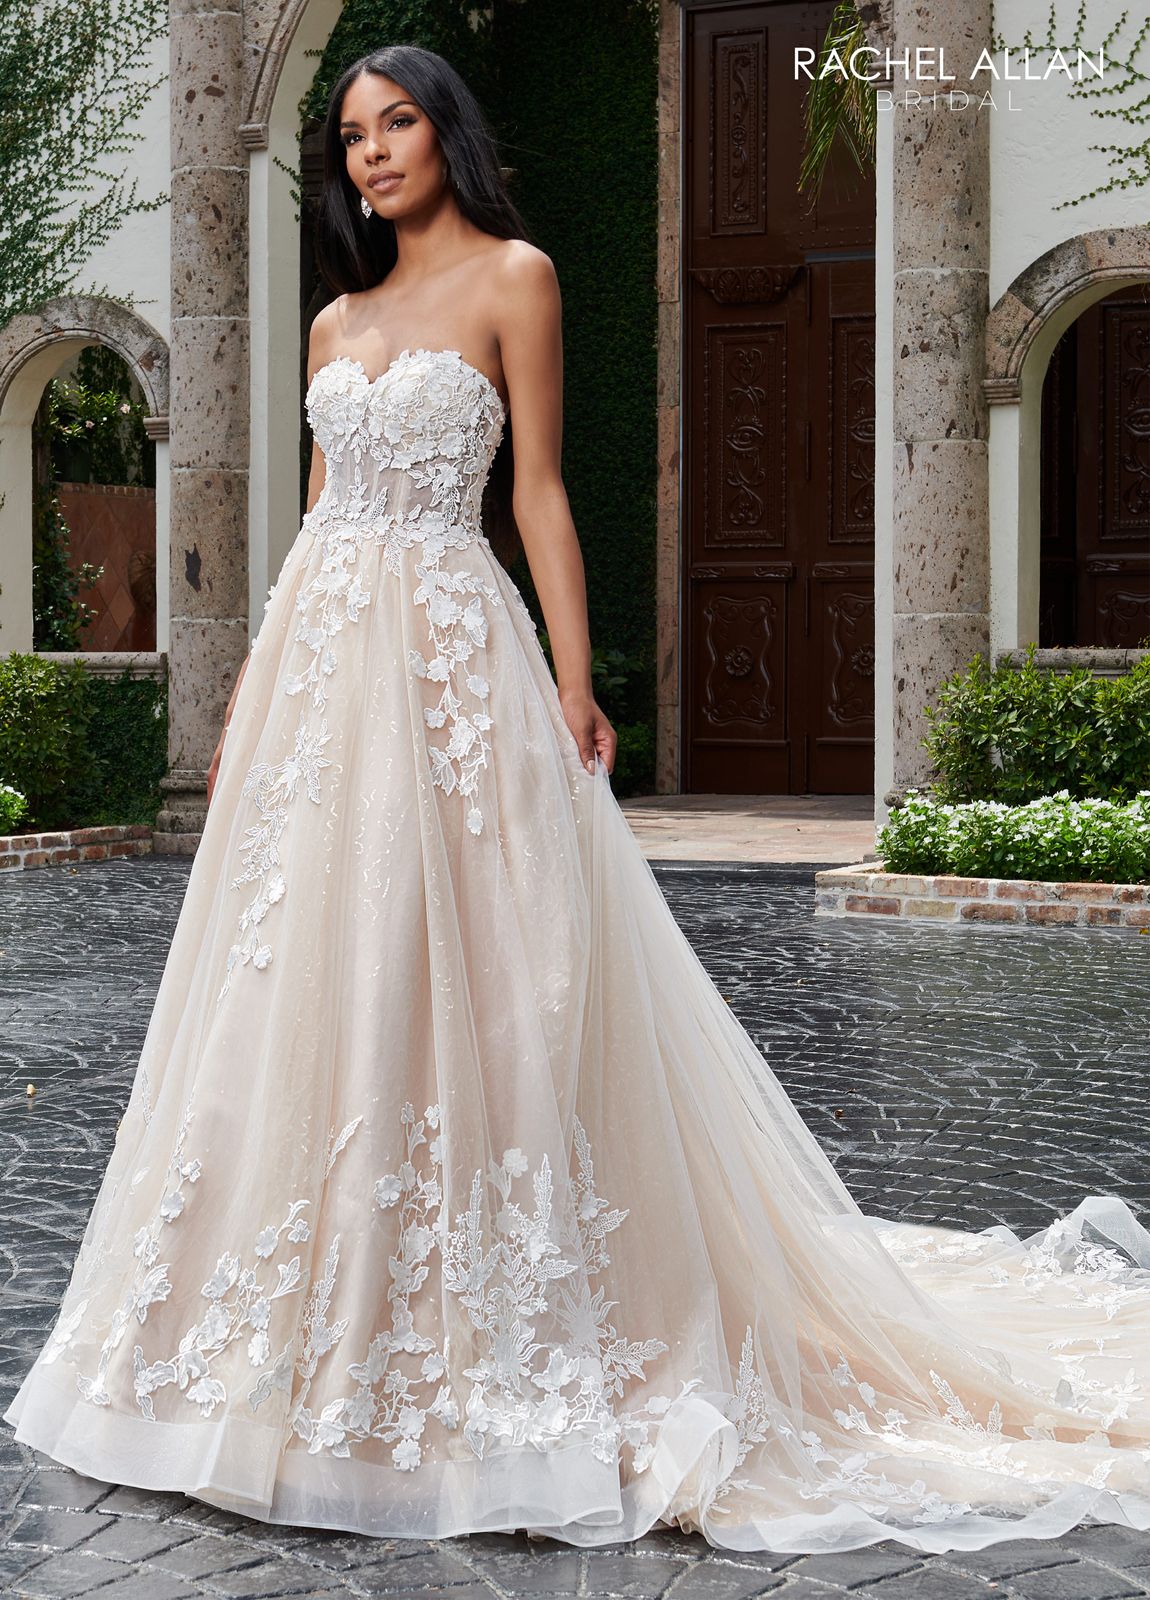 https://madamebridal.com/media/catalog/product/cache/83365d7c8fe98a8de86f2f82672e44c8/r/a/rachel-allan-rb3154-wedding-dress-01.1092.jpg